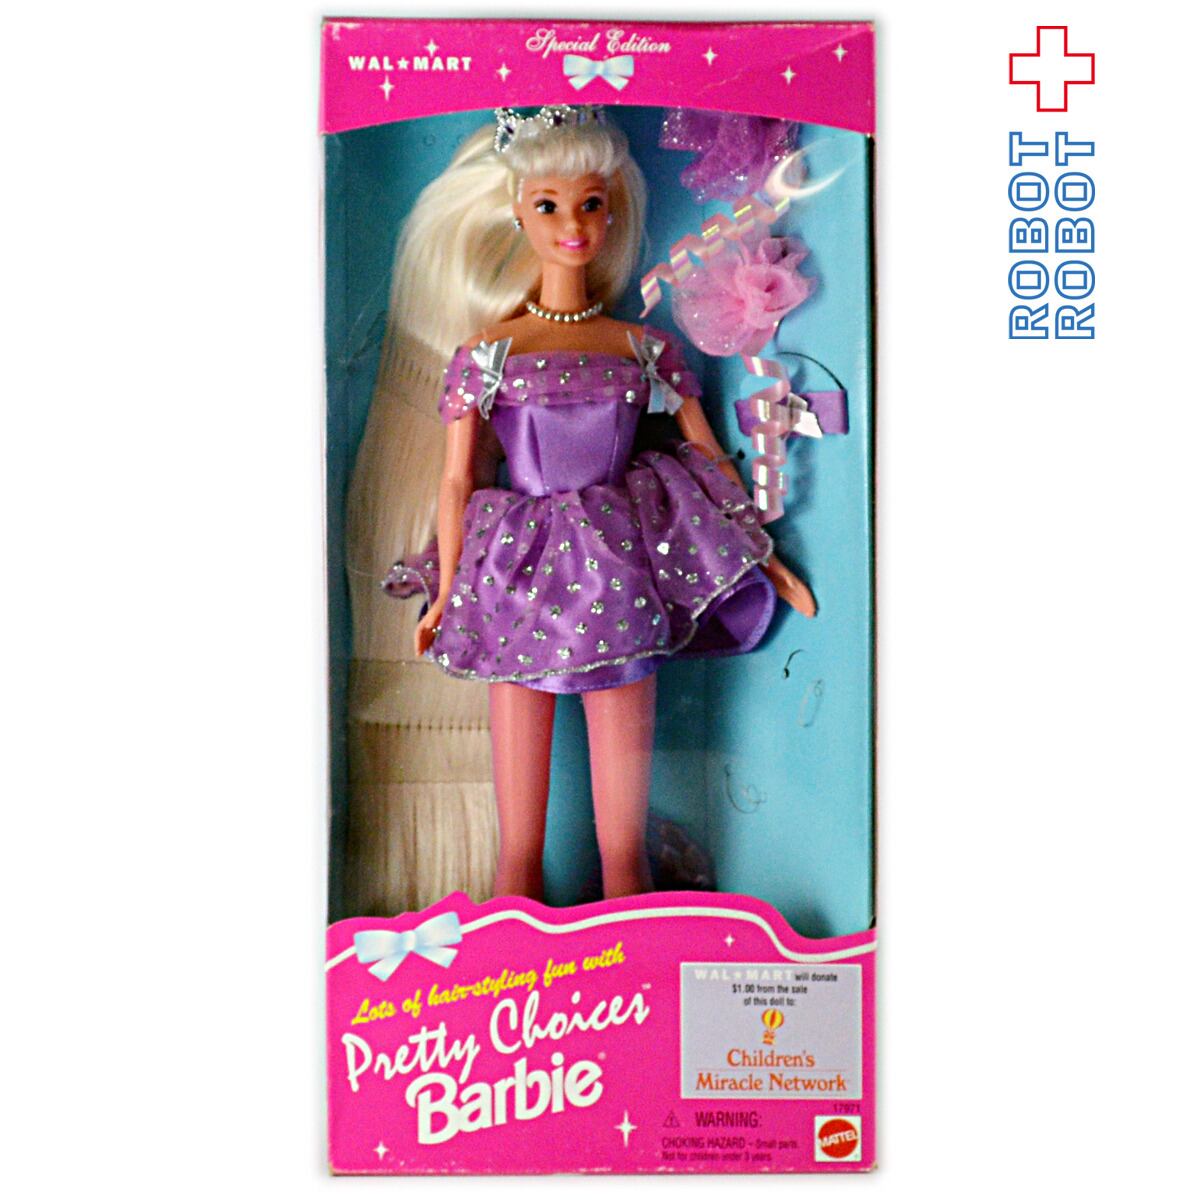 Pretty Choices バービー Barbie Doll Special Edition